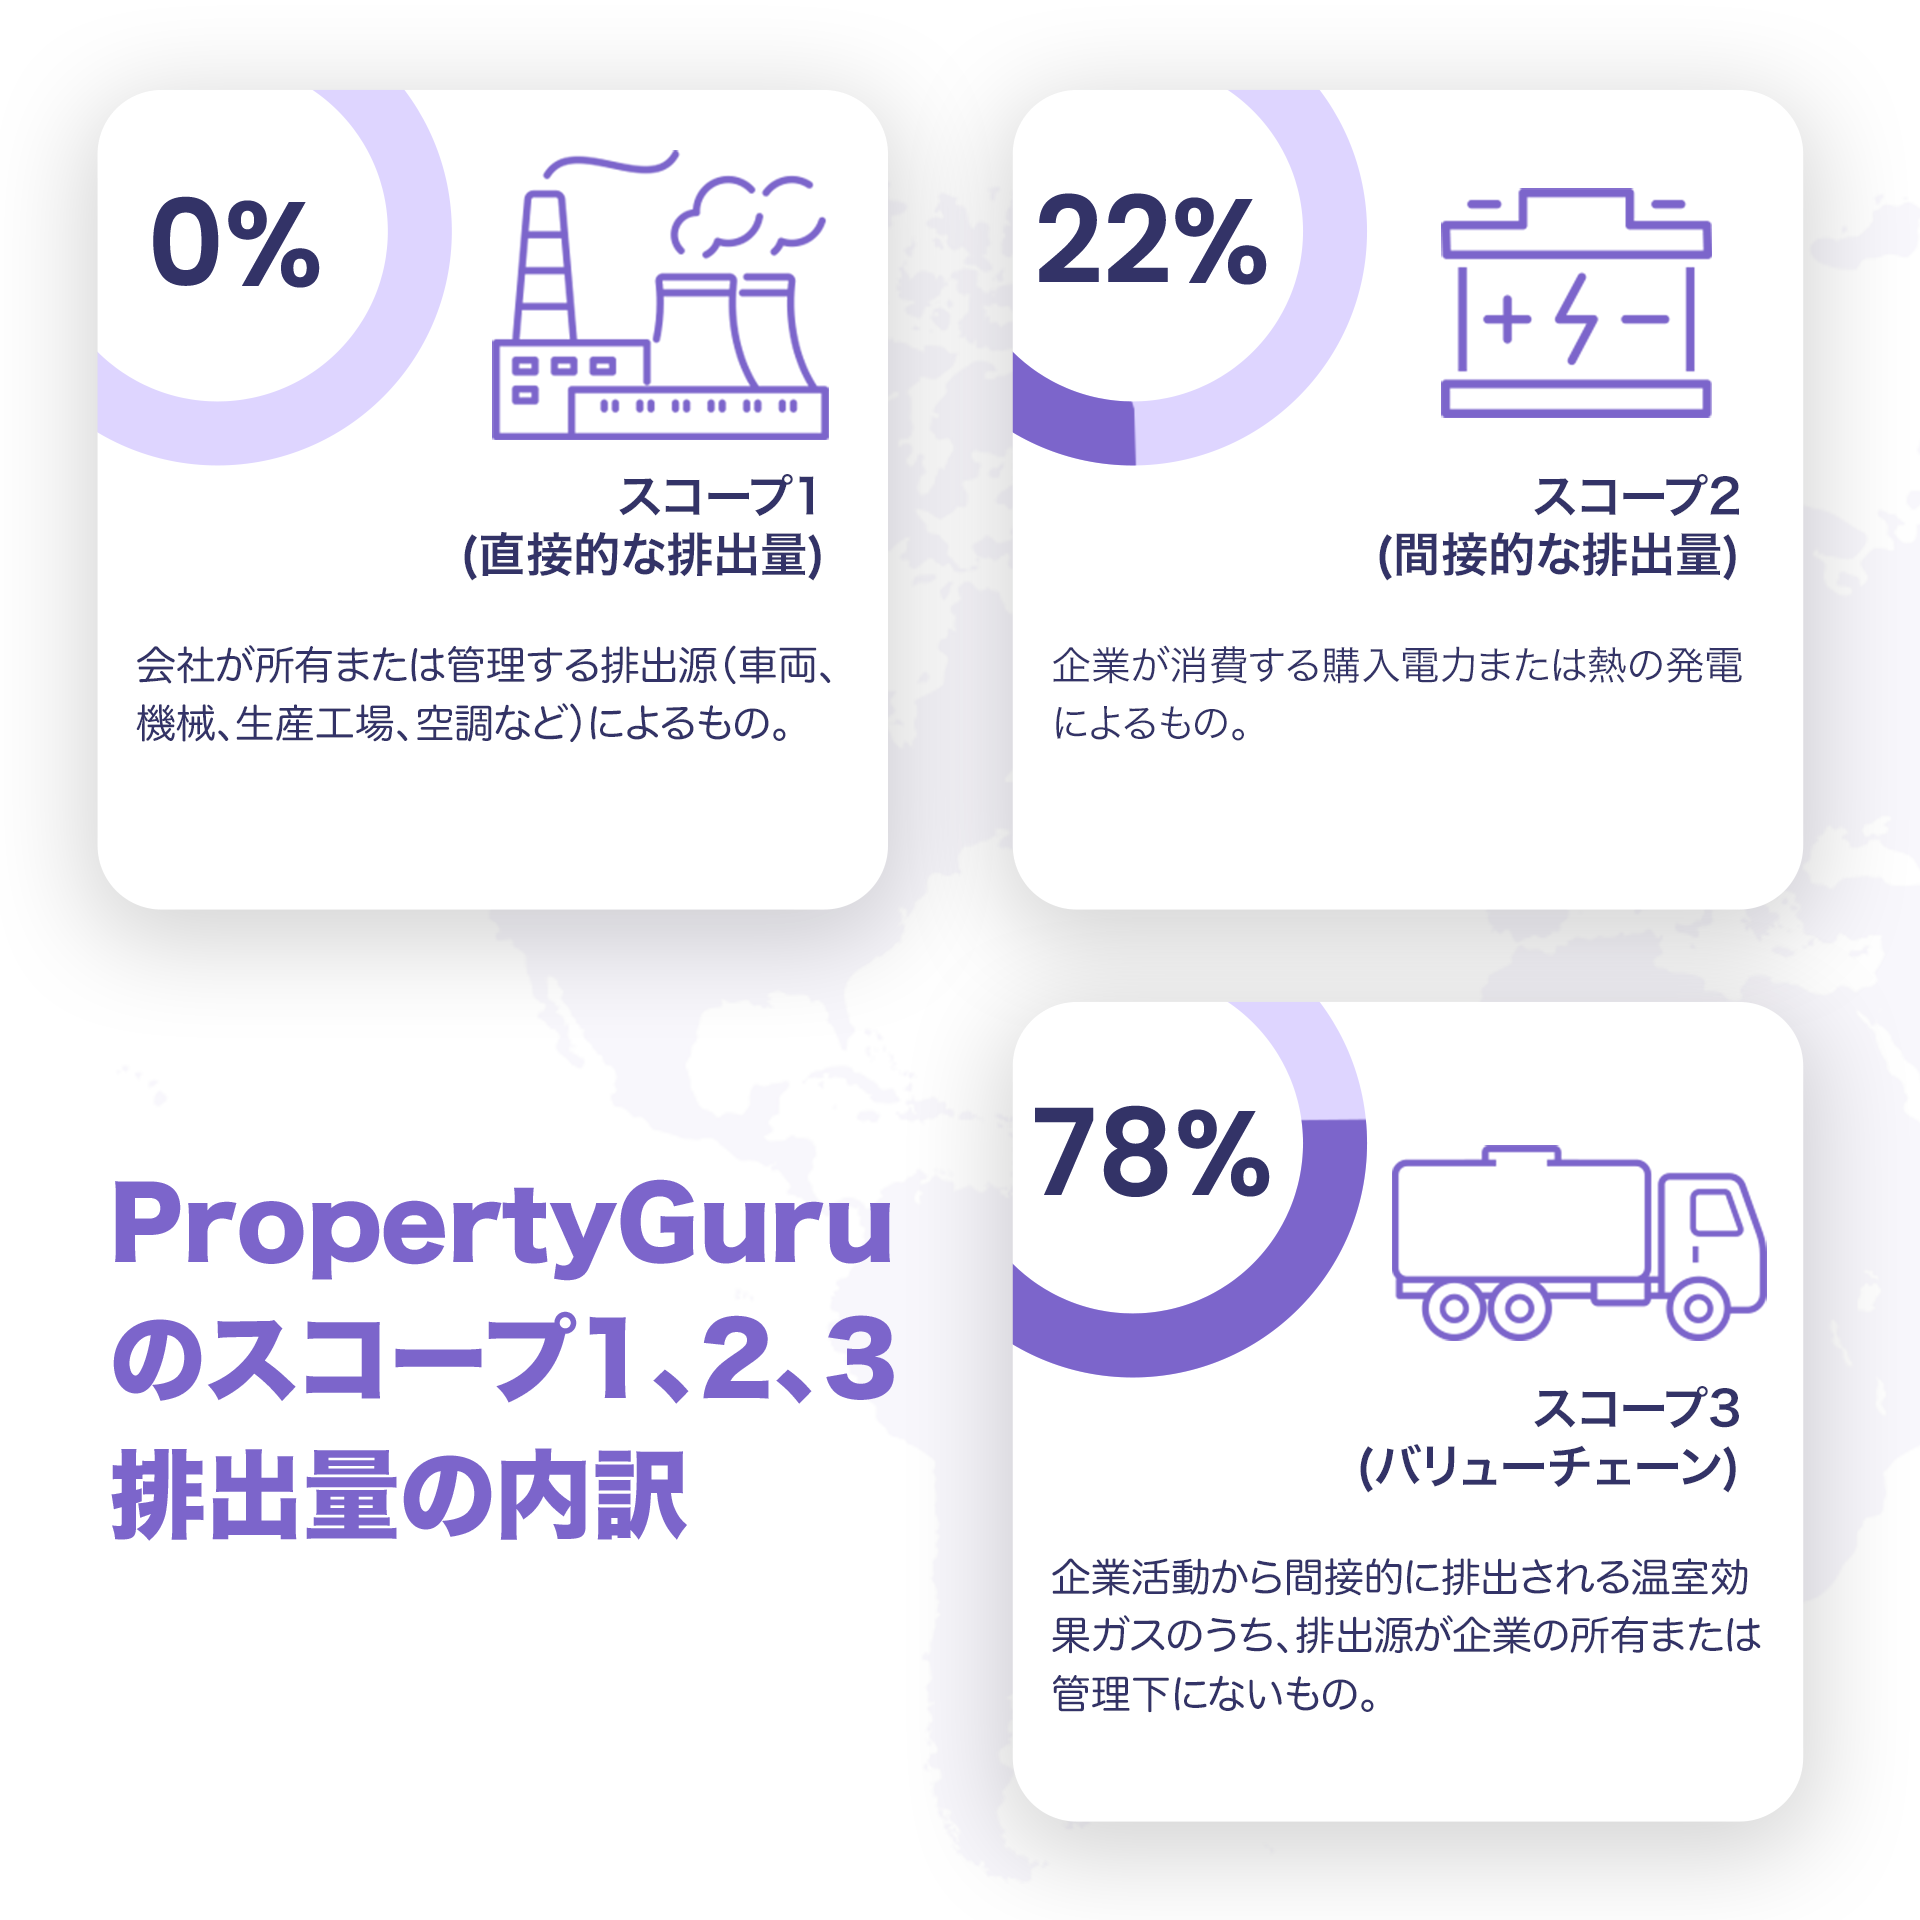 Property Guru Case Study Page_jp-1